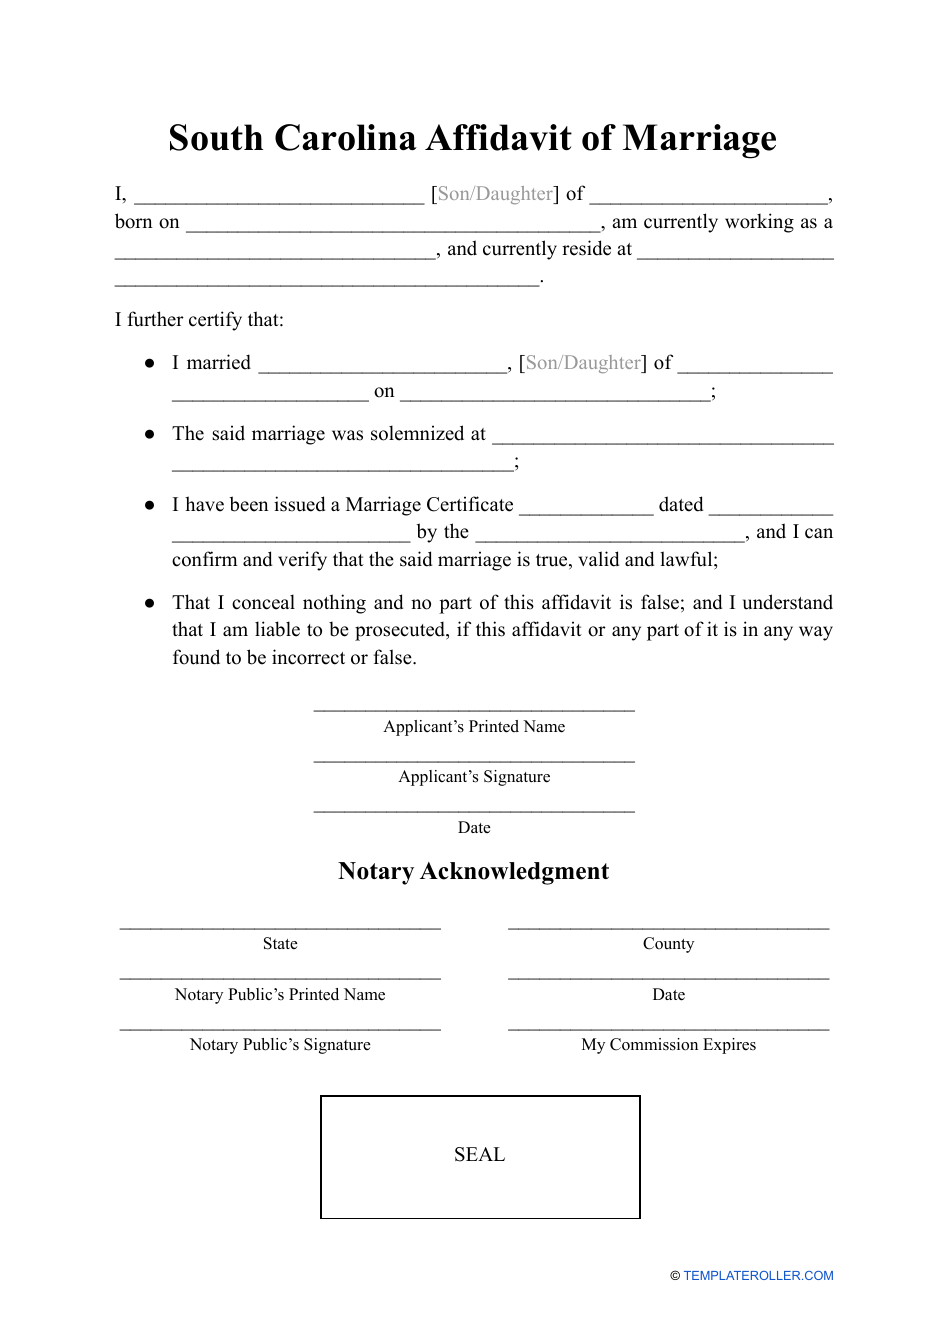 Affidavit of Marriage - South Carolina, Page 1